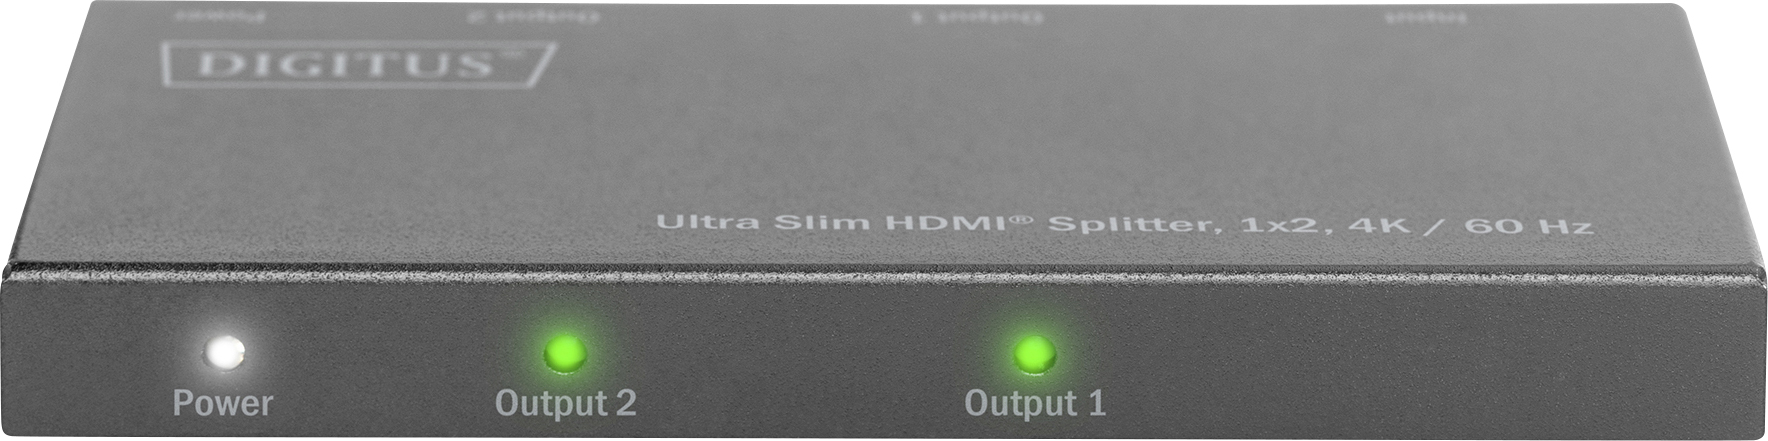 Digitus DS-45322 2 Port HDMI-Splitter LED-Anzeige, Metallgehäuse, Ultra HD-fähig 4096 x 2160 Pixel